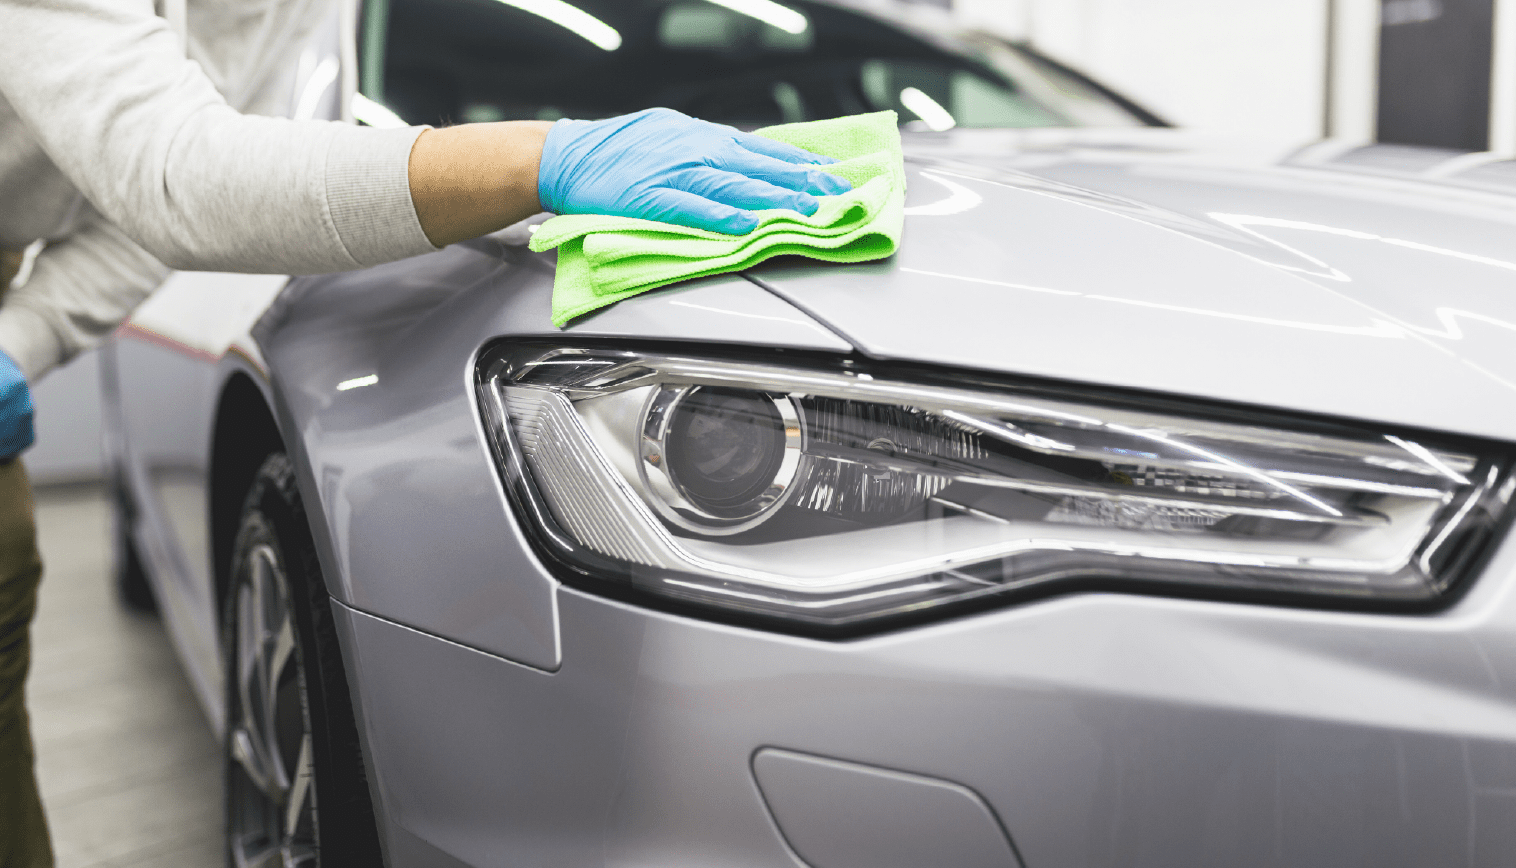 What is waterless car wash detailing?